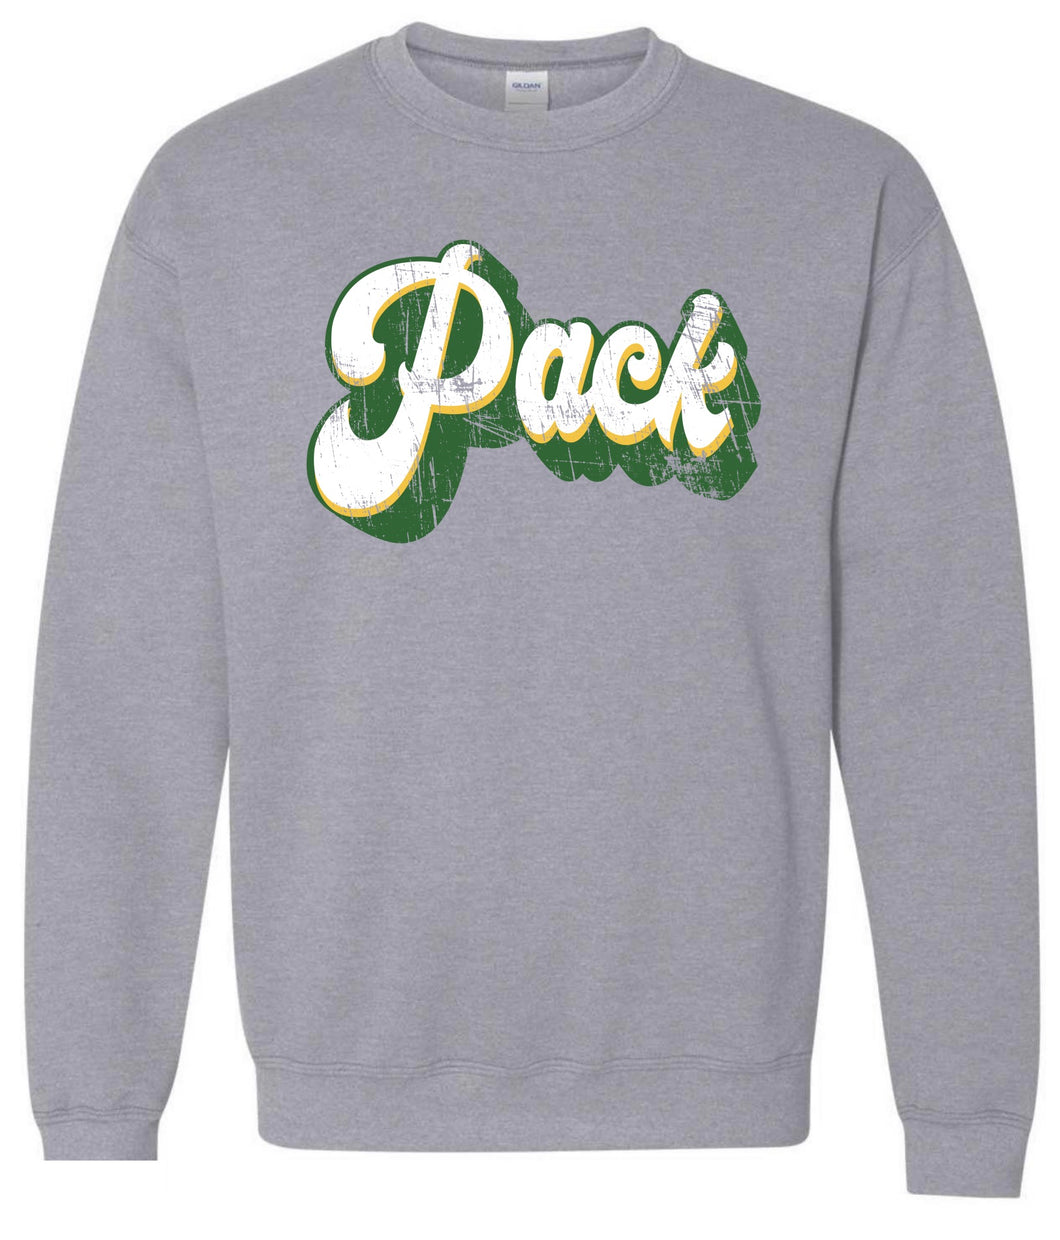 Pack Distressed Retro Sweatshirt